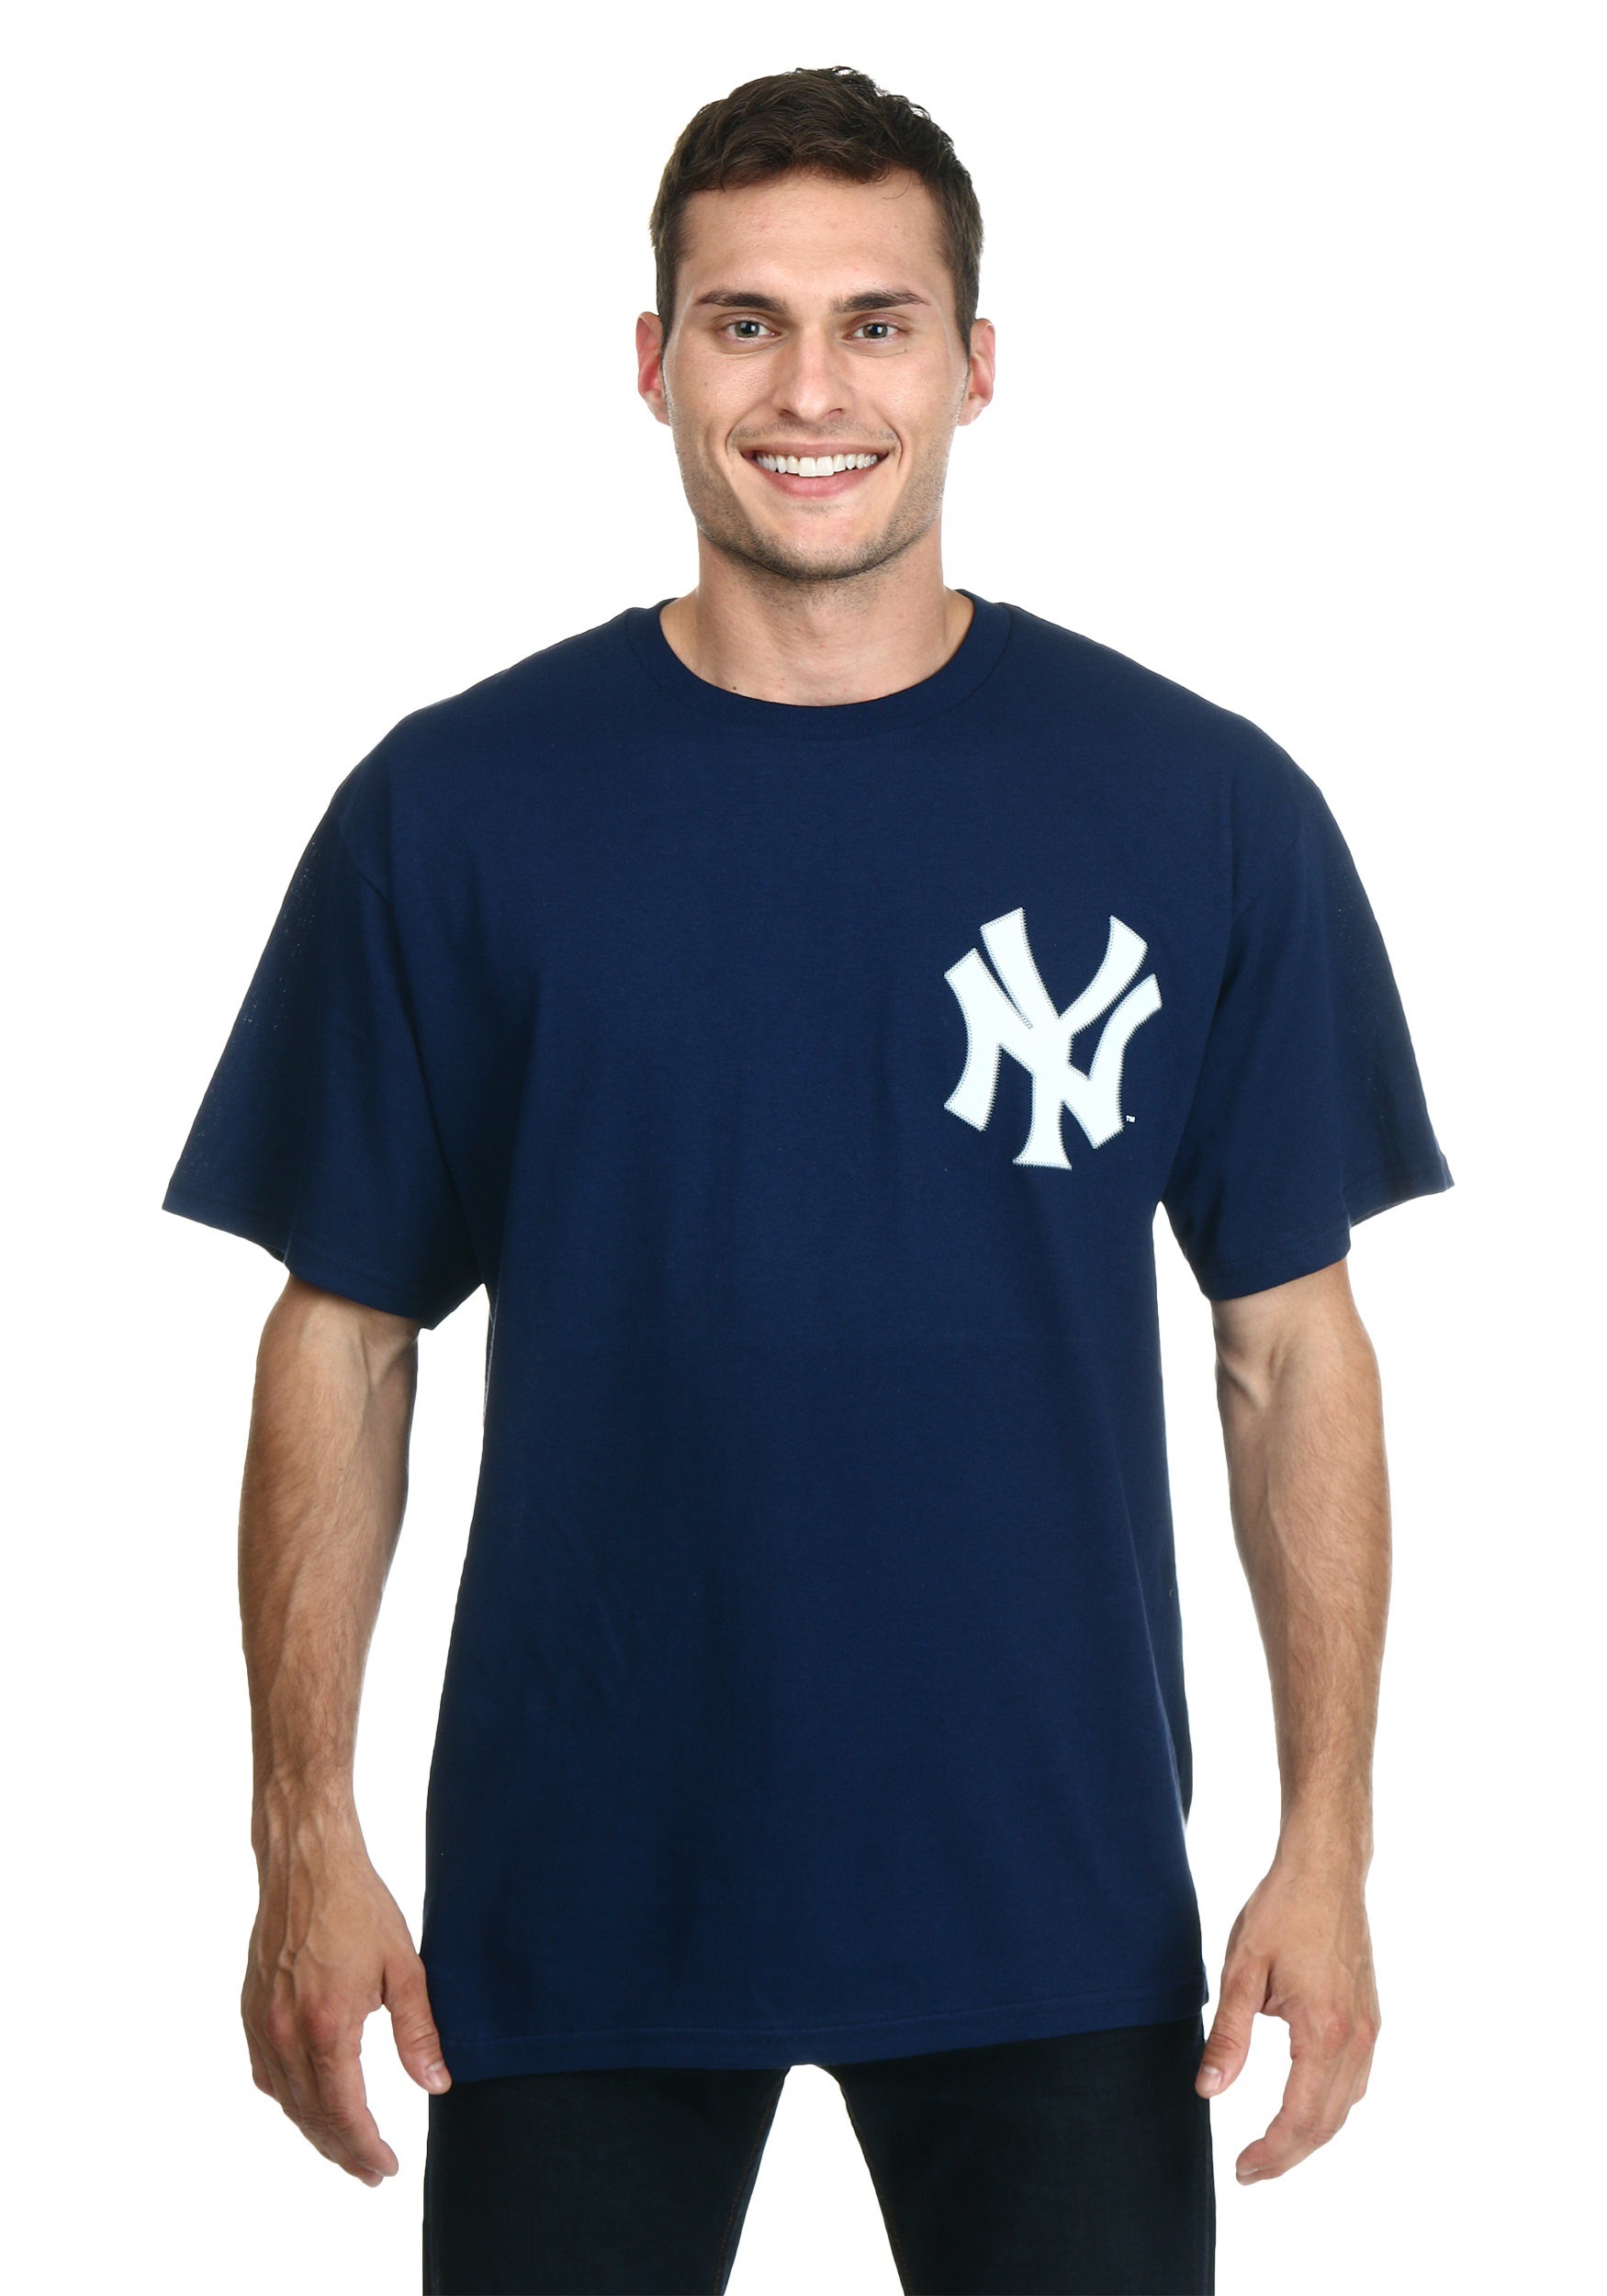 Official Wordmark New York Yankees Men's T-Shirt